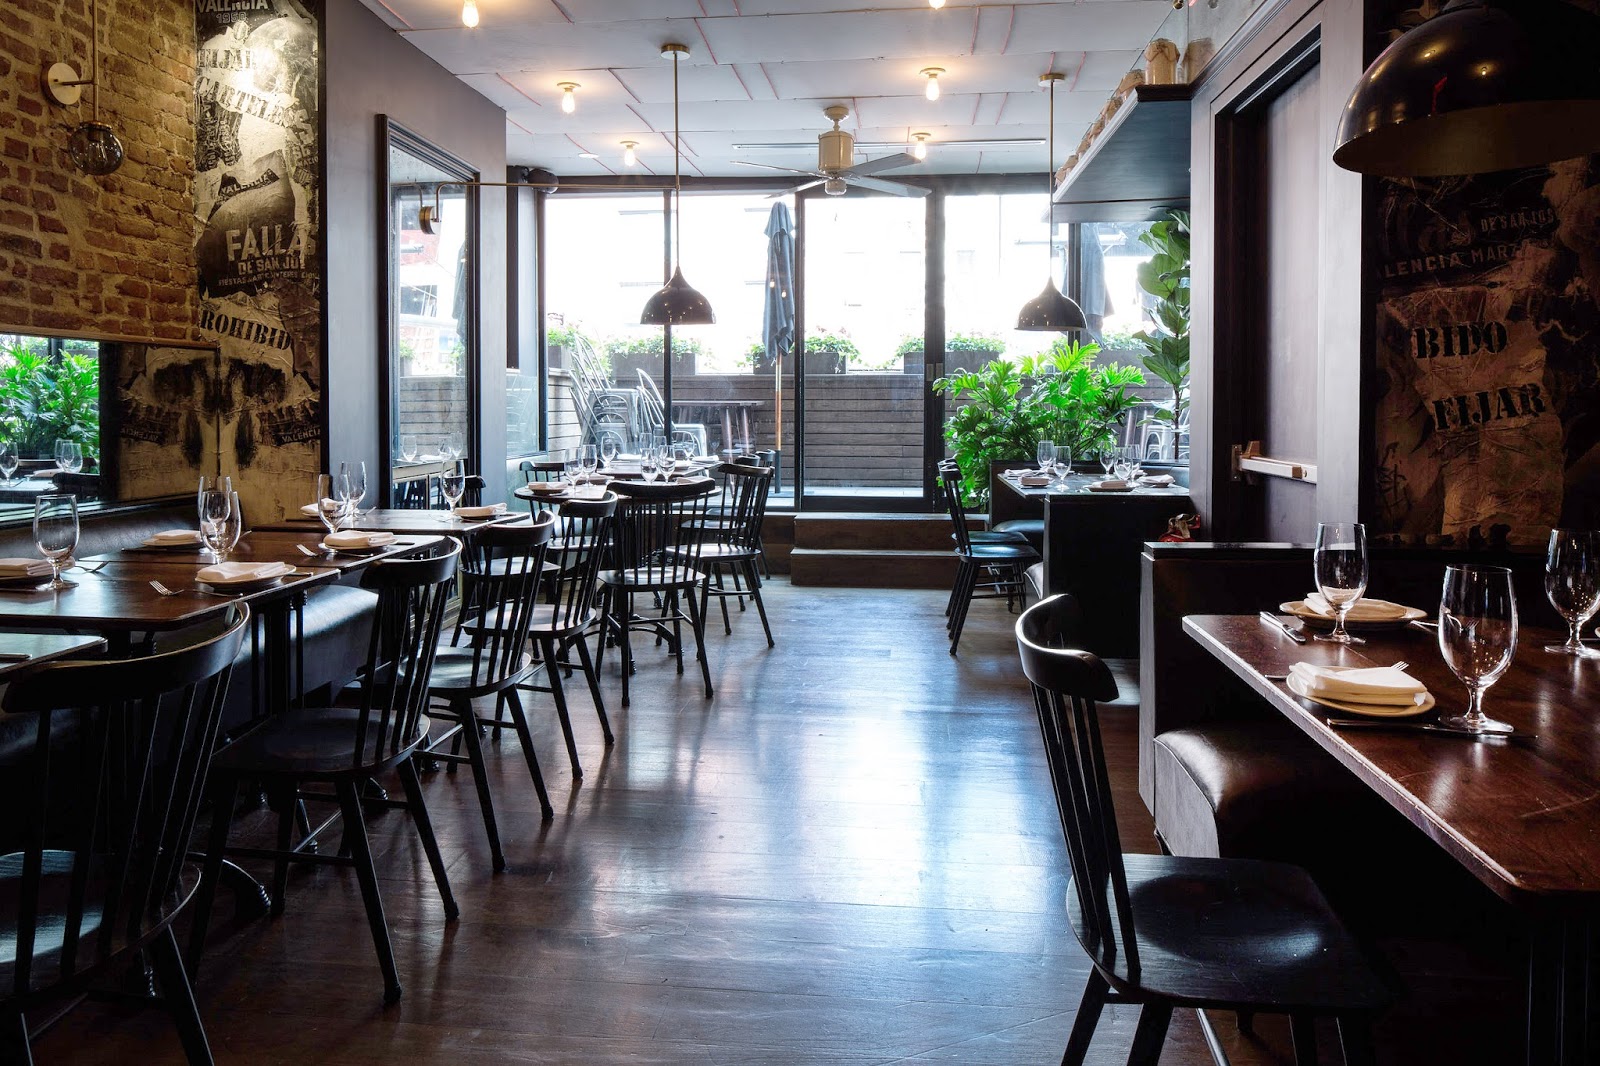 Photo of SOCARRAT Paella Bar - Nolita in New York City, New York, United States - 6 Picture of Restaurant, Food, Point of interest, Establishment